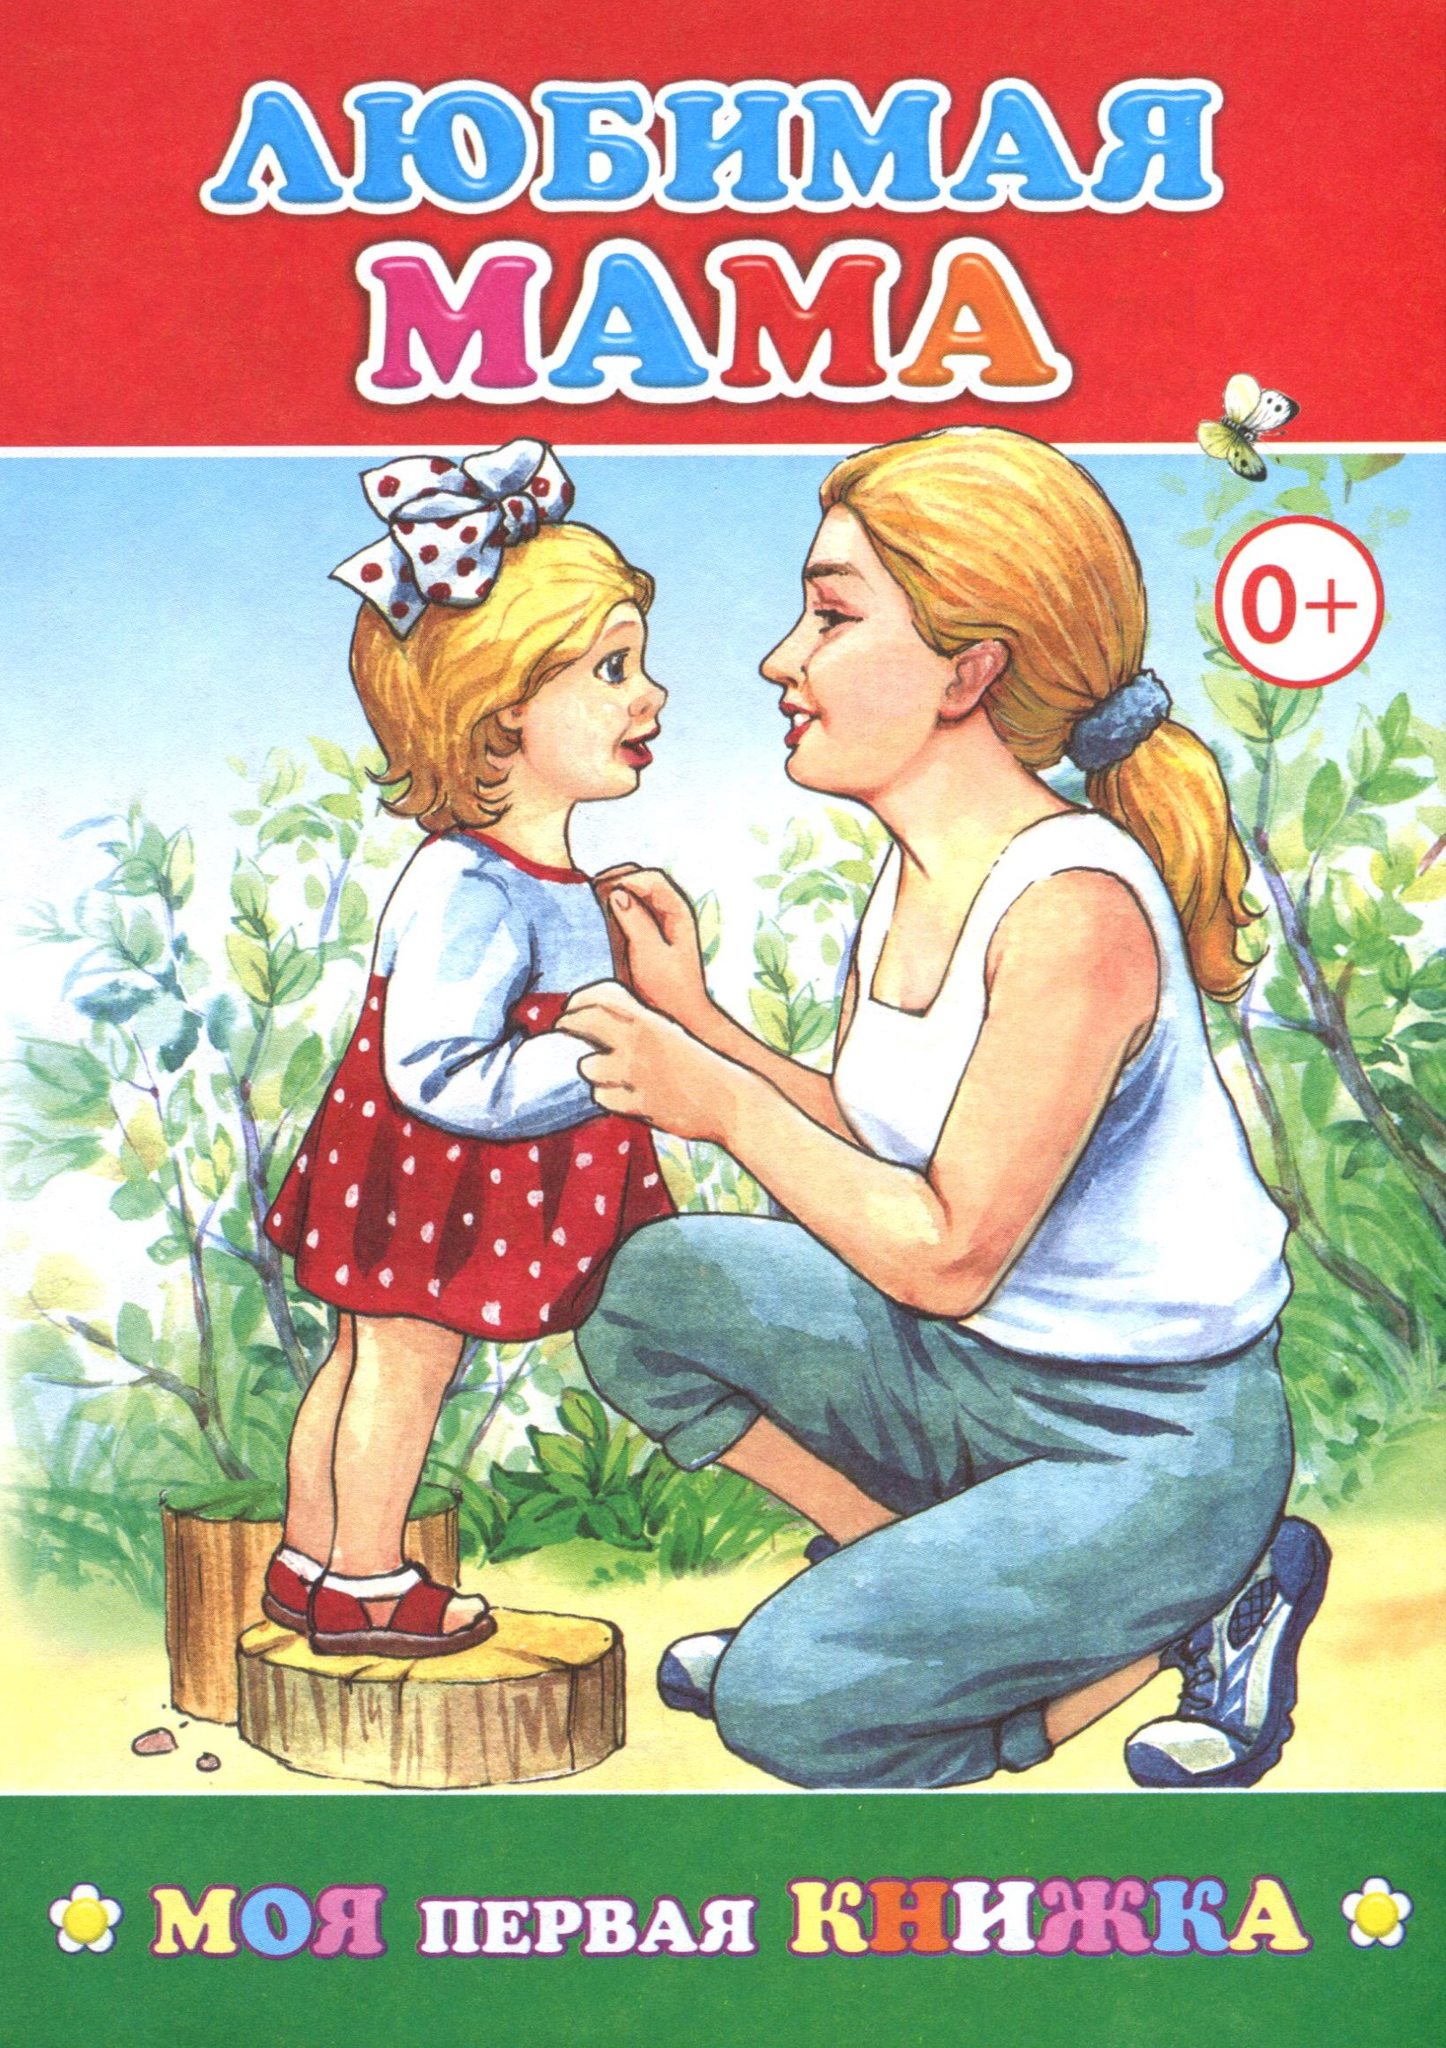 Книжки про маму. Книги о маме. Книги о маме для детей. Детские книжки про маму. Детские книги о маме.